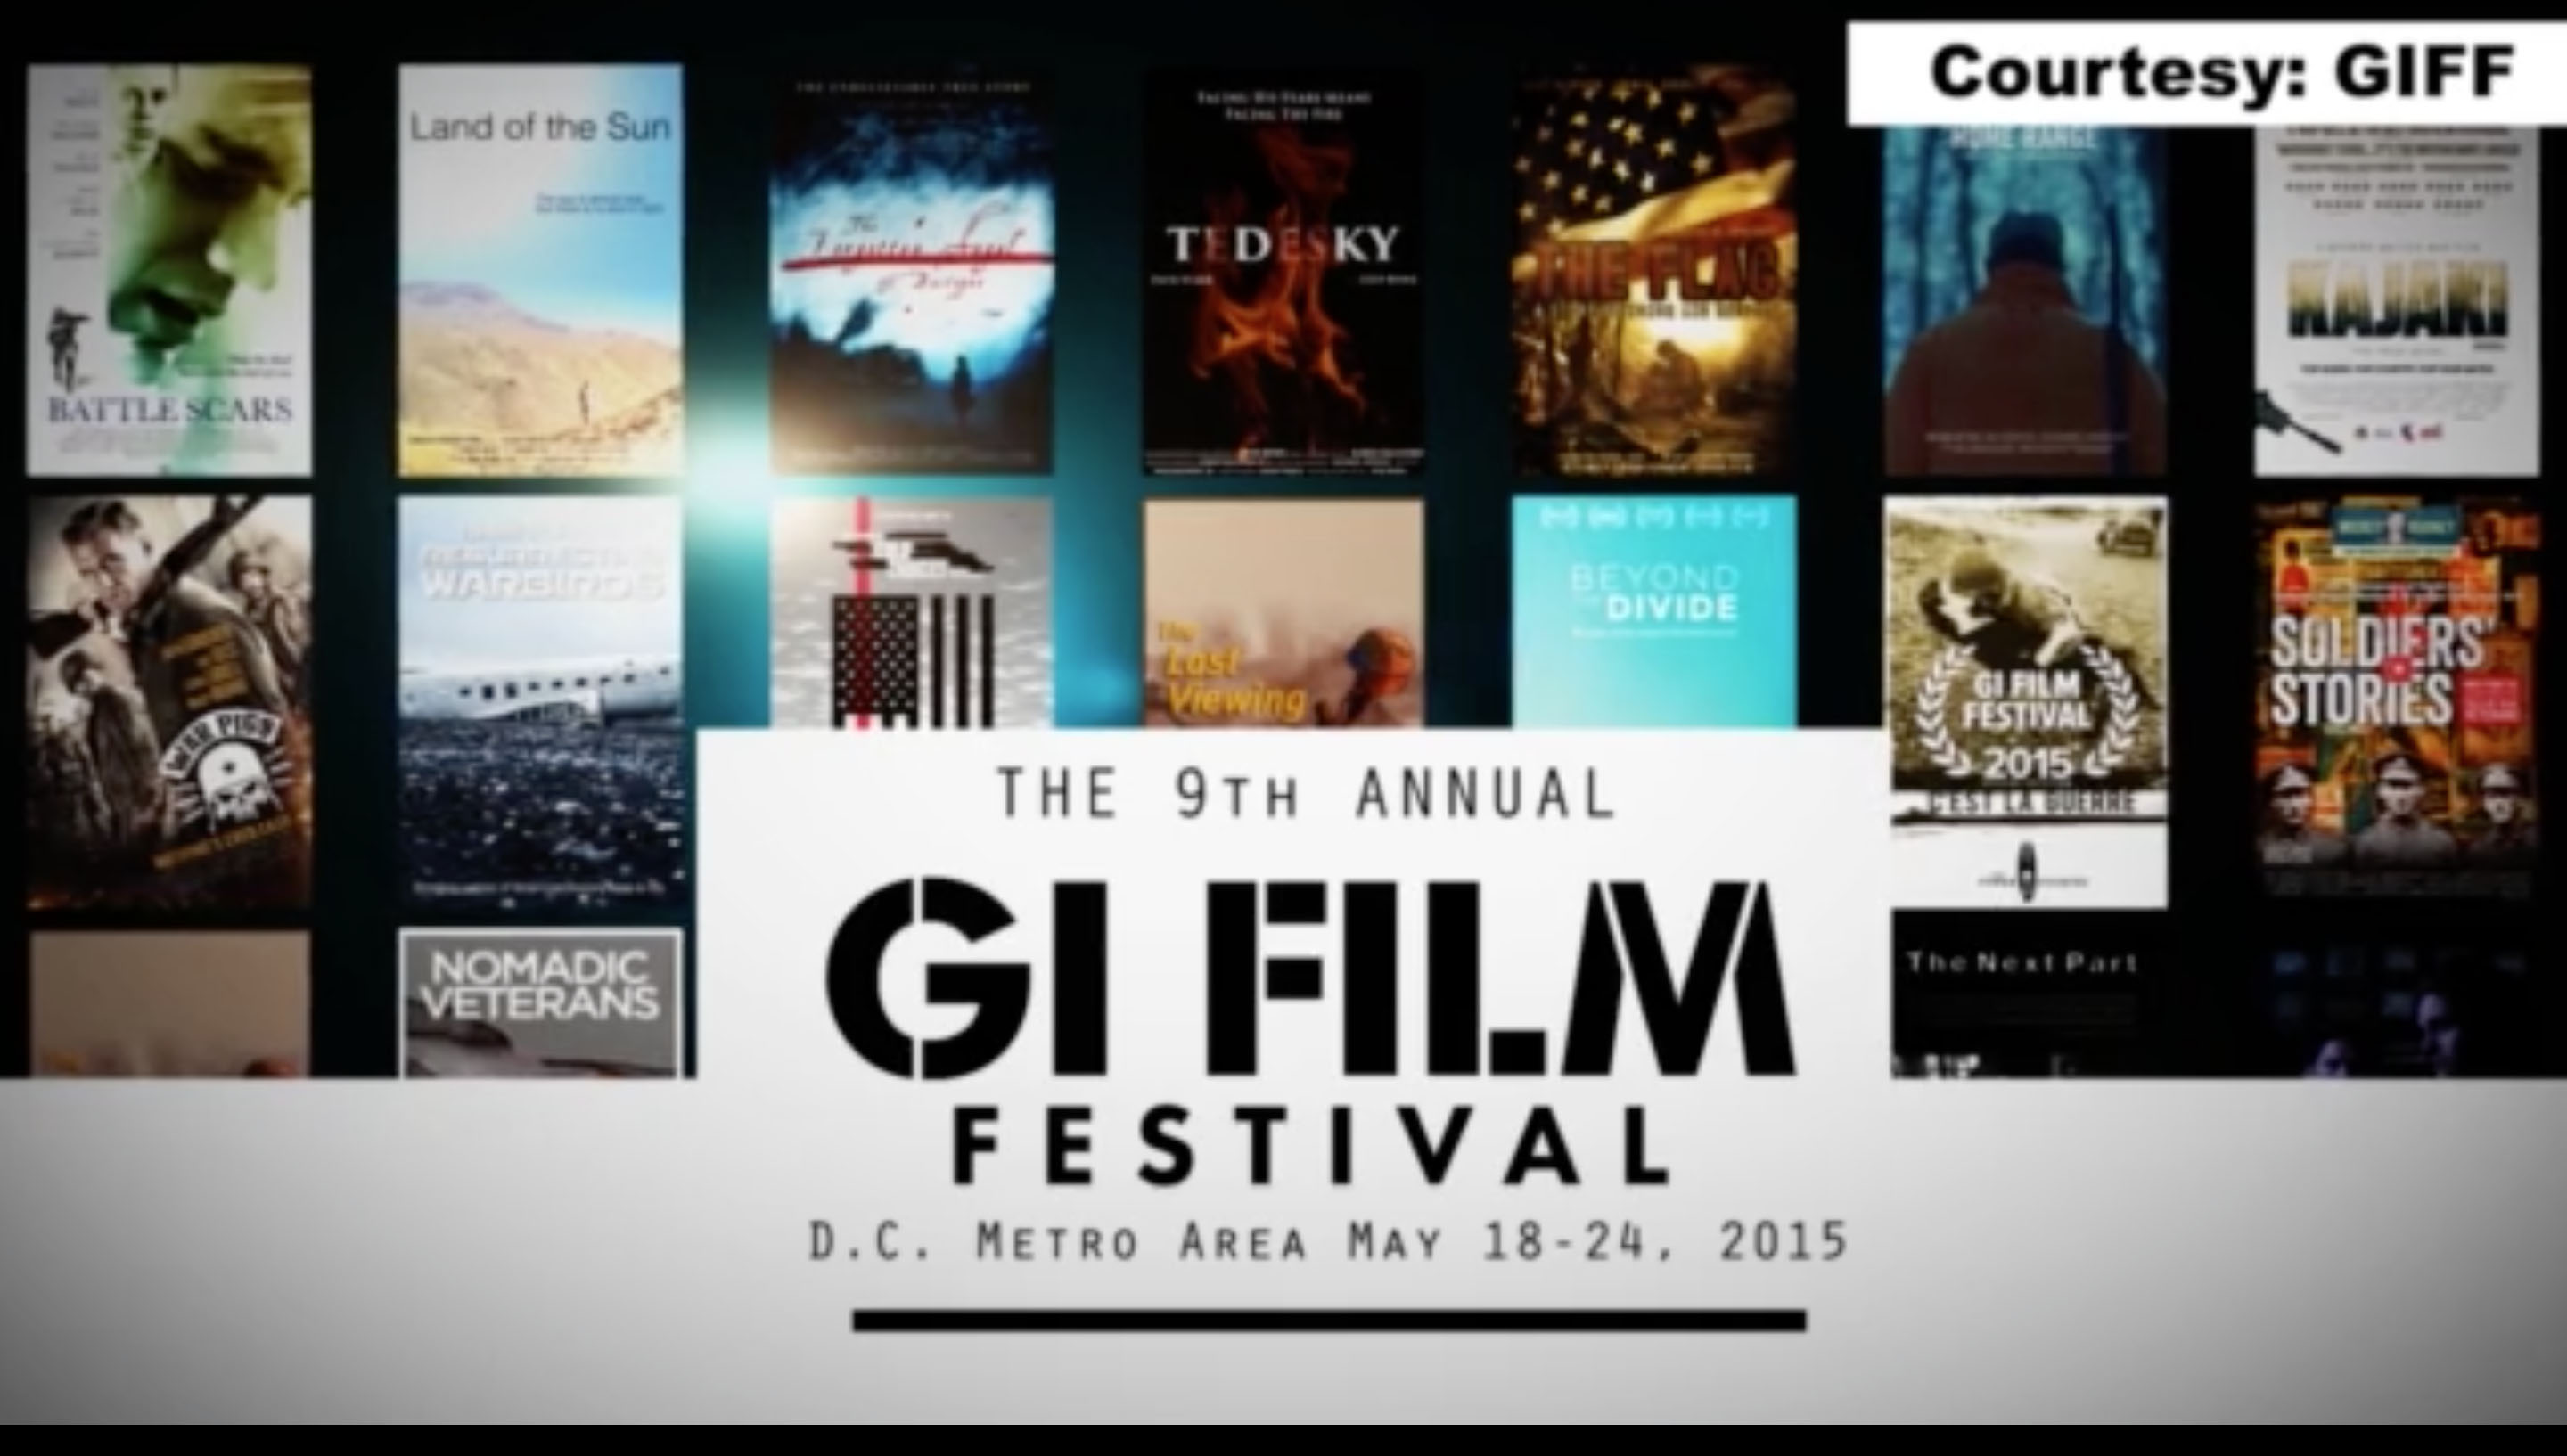 GI Film Festival bigger than ever in 9th year